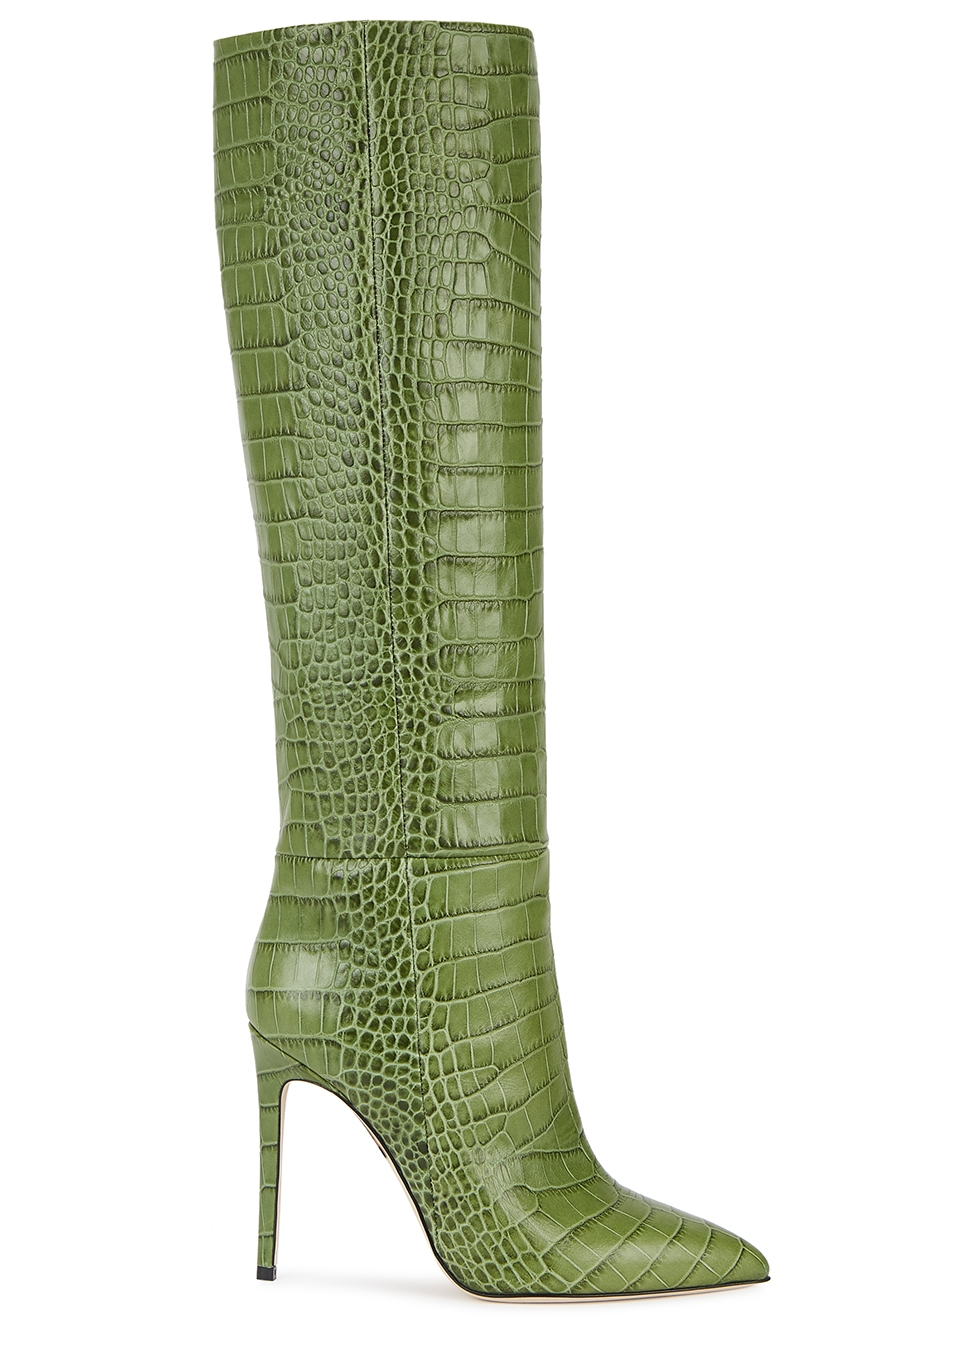 designer heeled boots